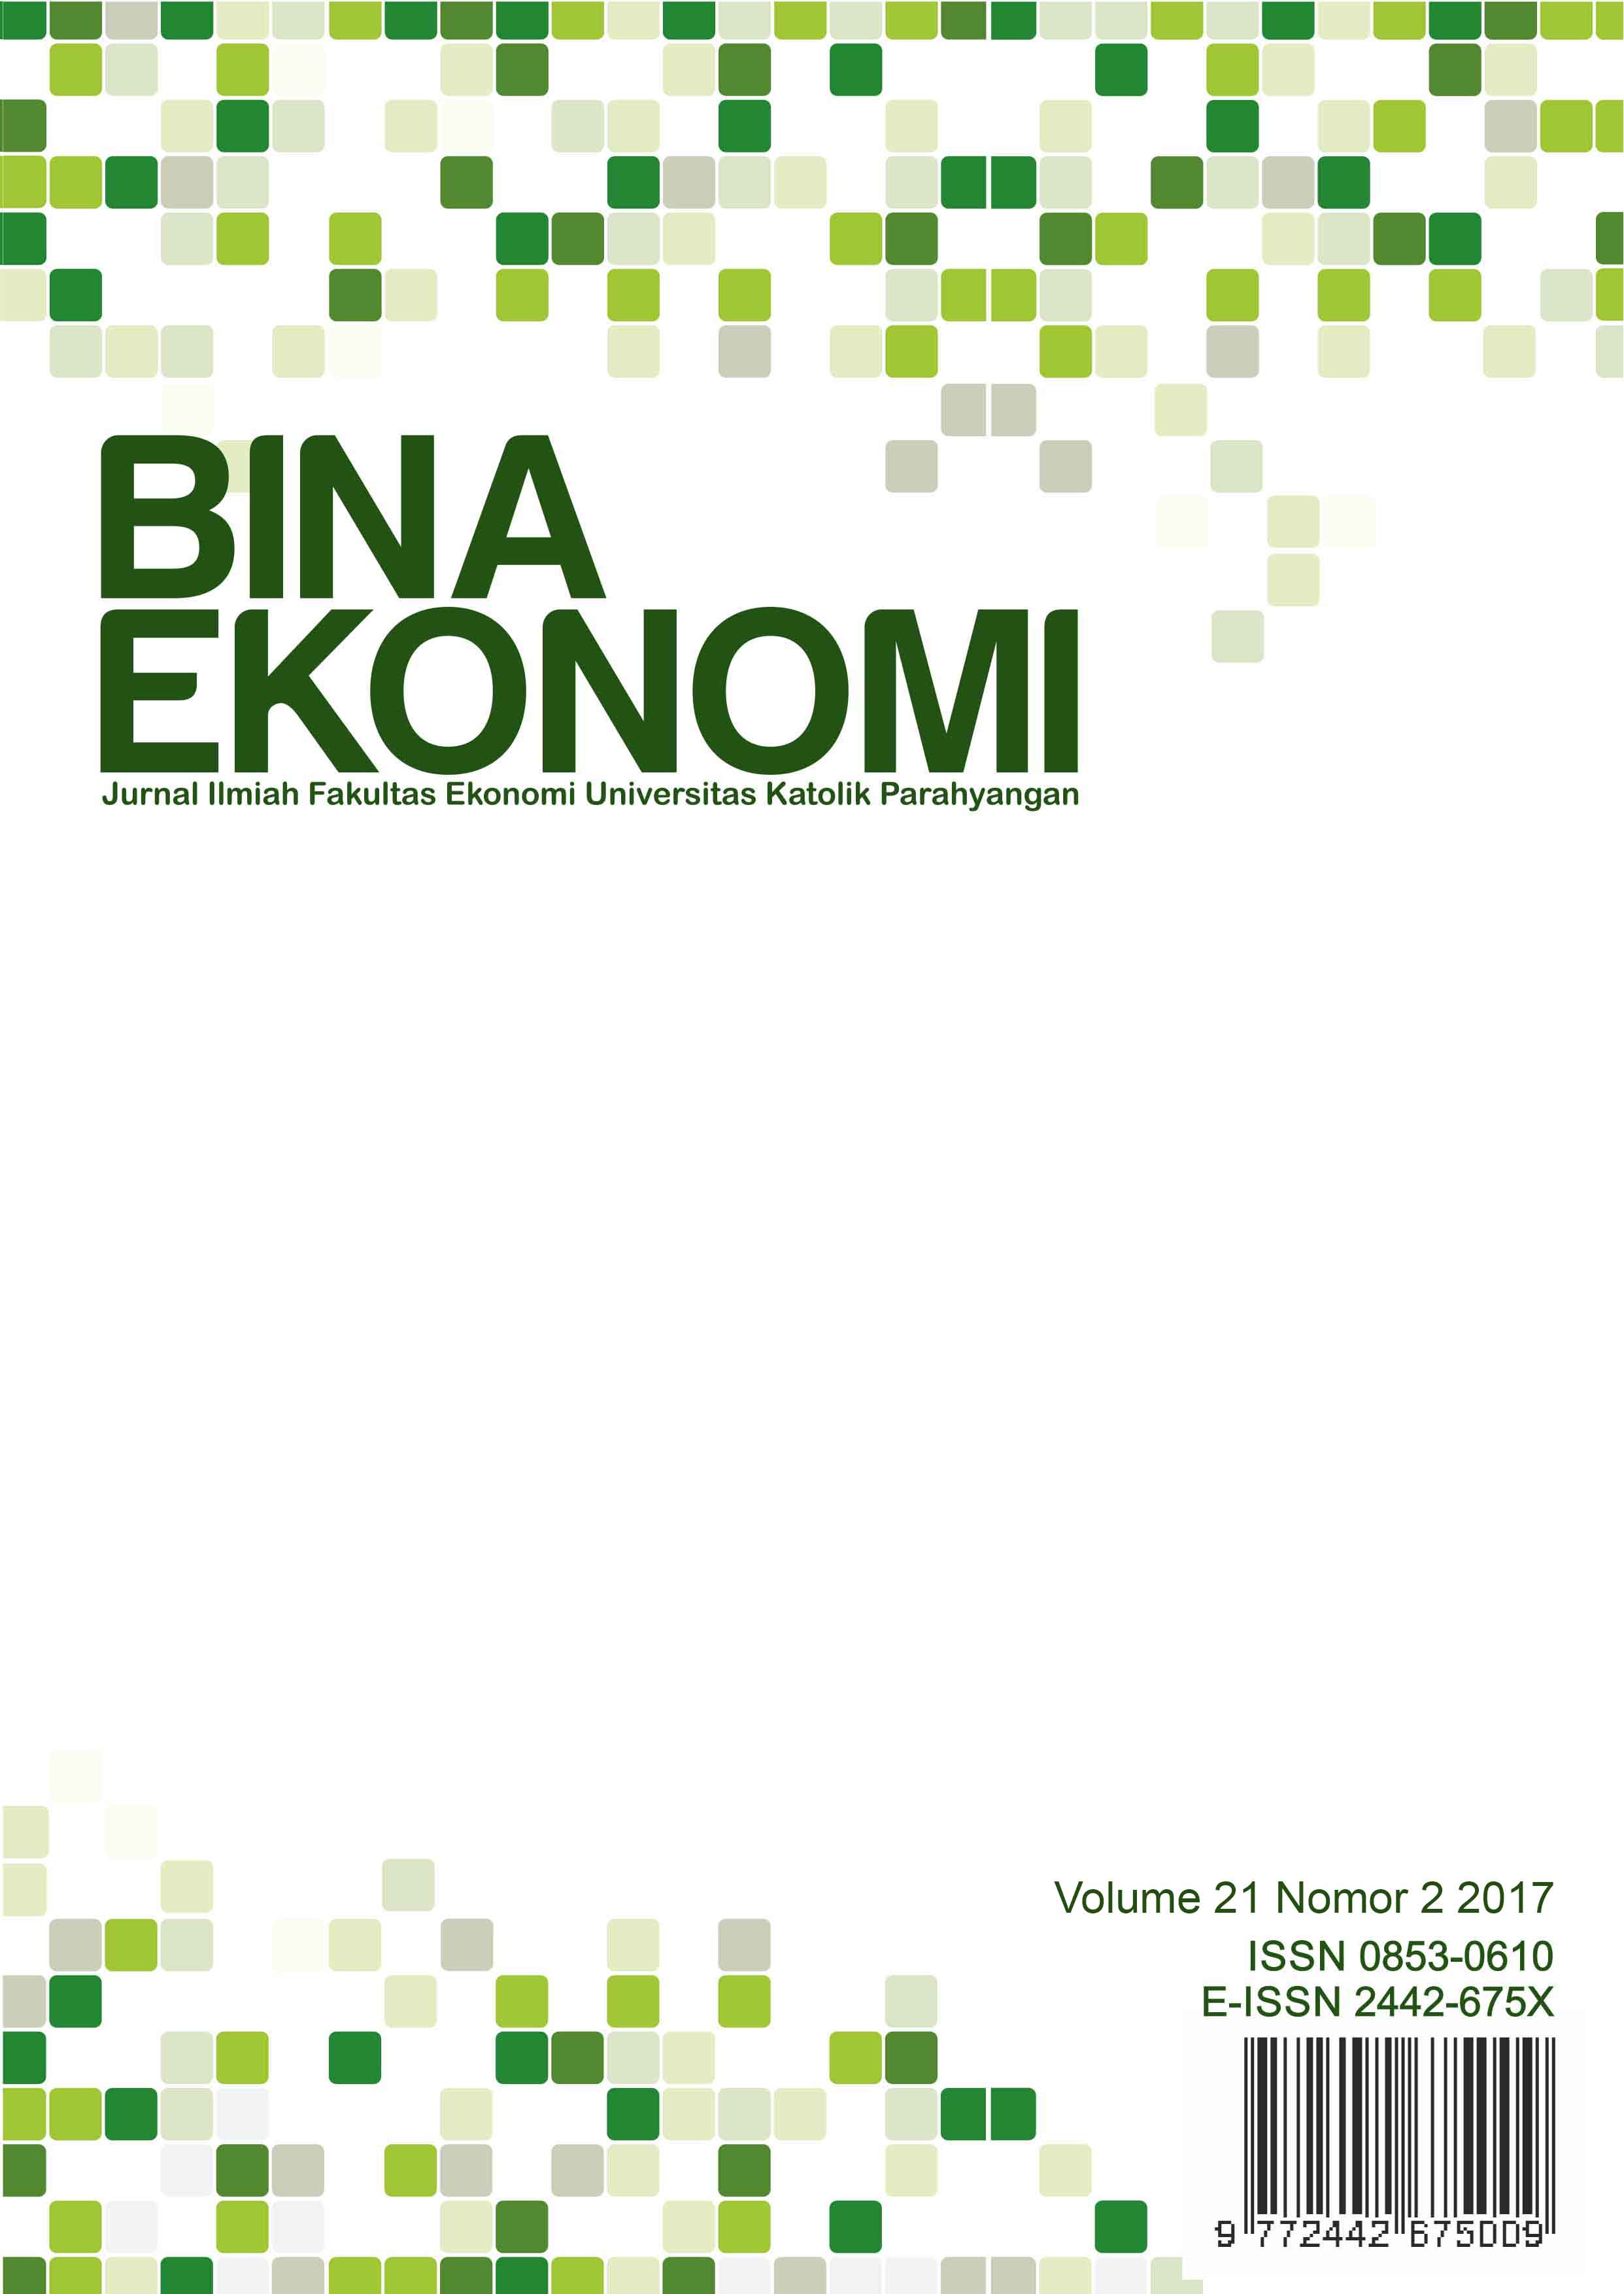 					View Vol. 21 No. 2 (2017): Bina Ekonomi: Majalah Ilmiah Fakultas Ekonomi Universitas Katolik Parahyangan
				